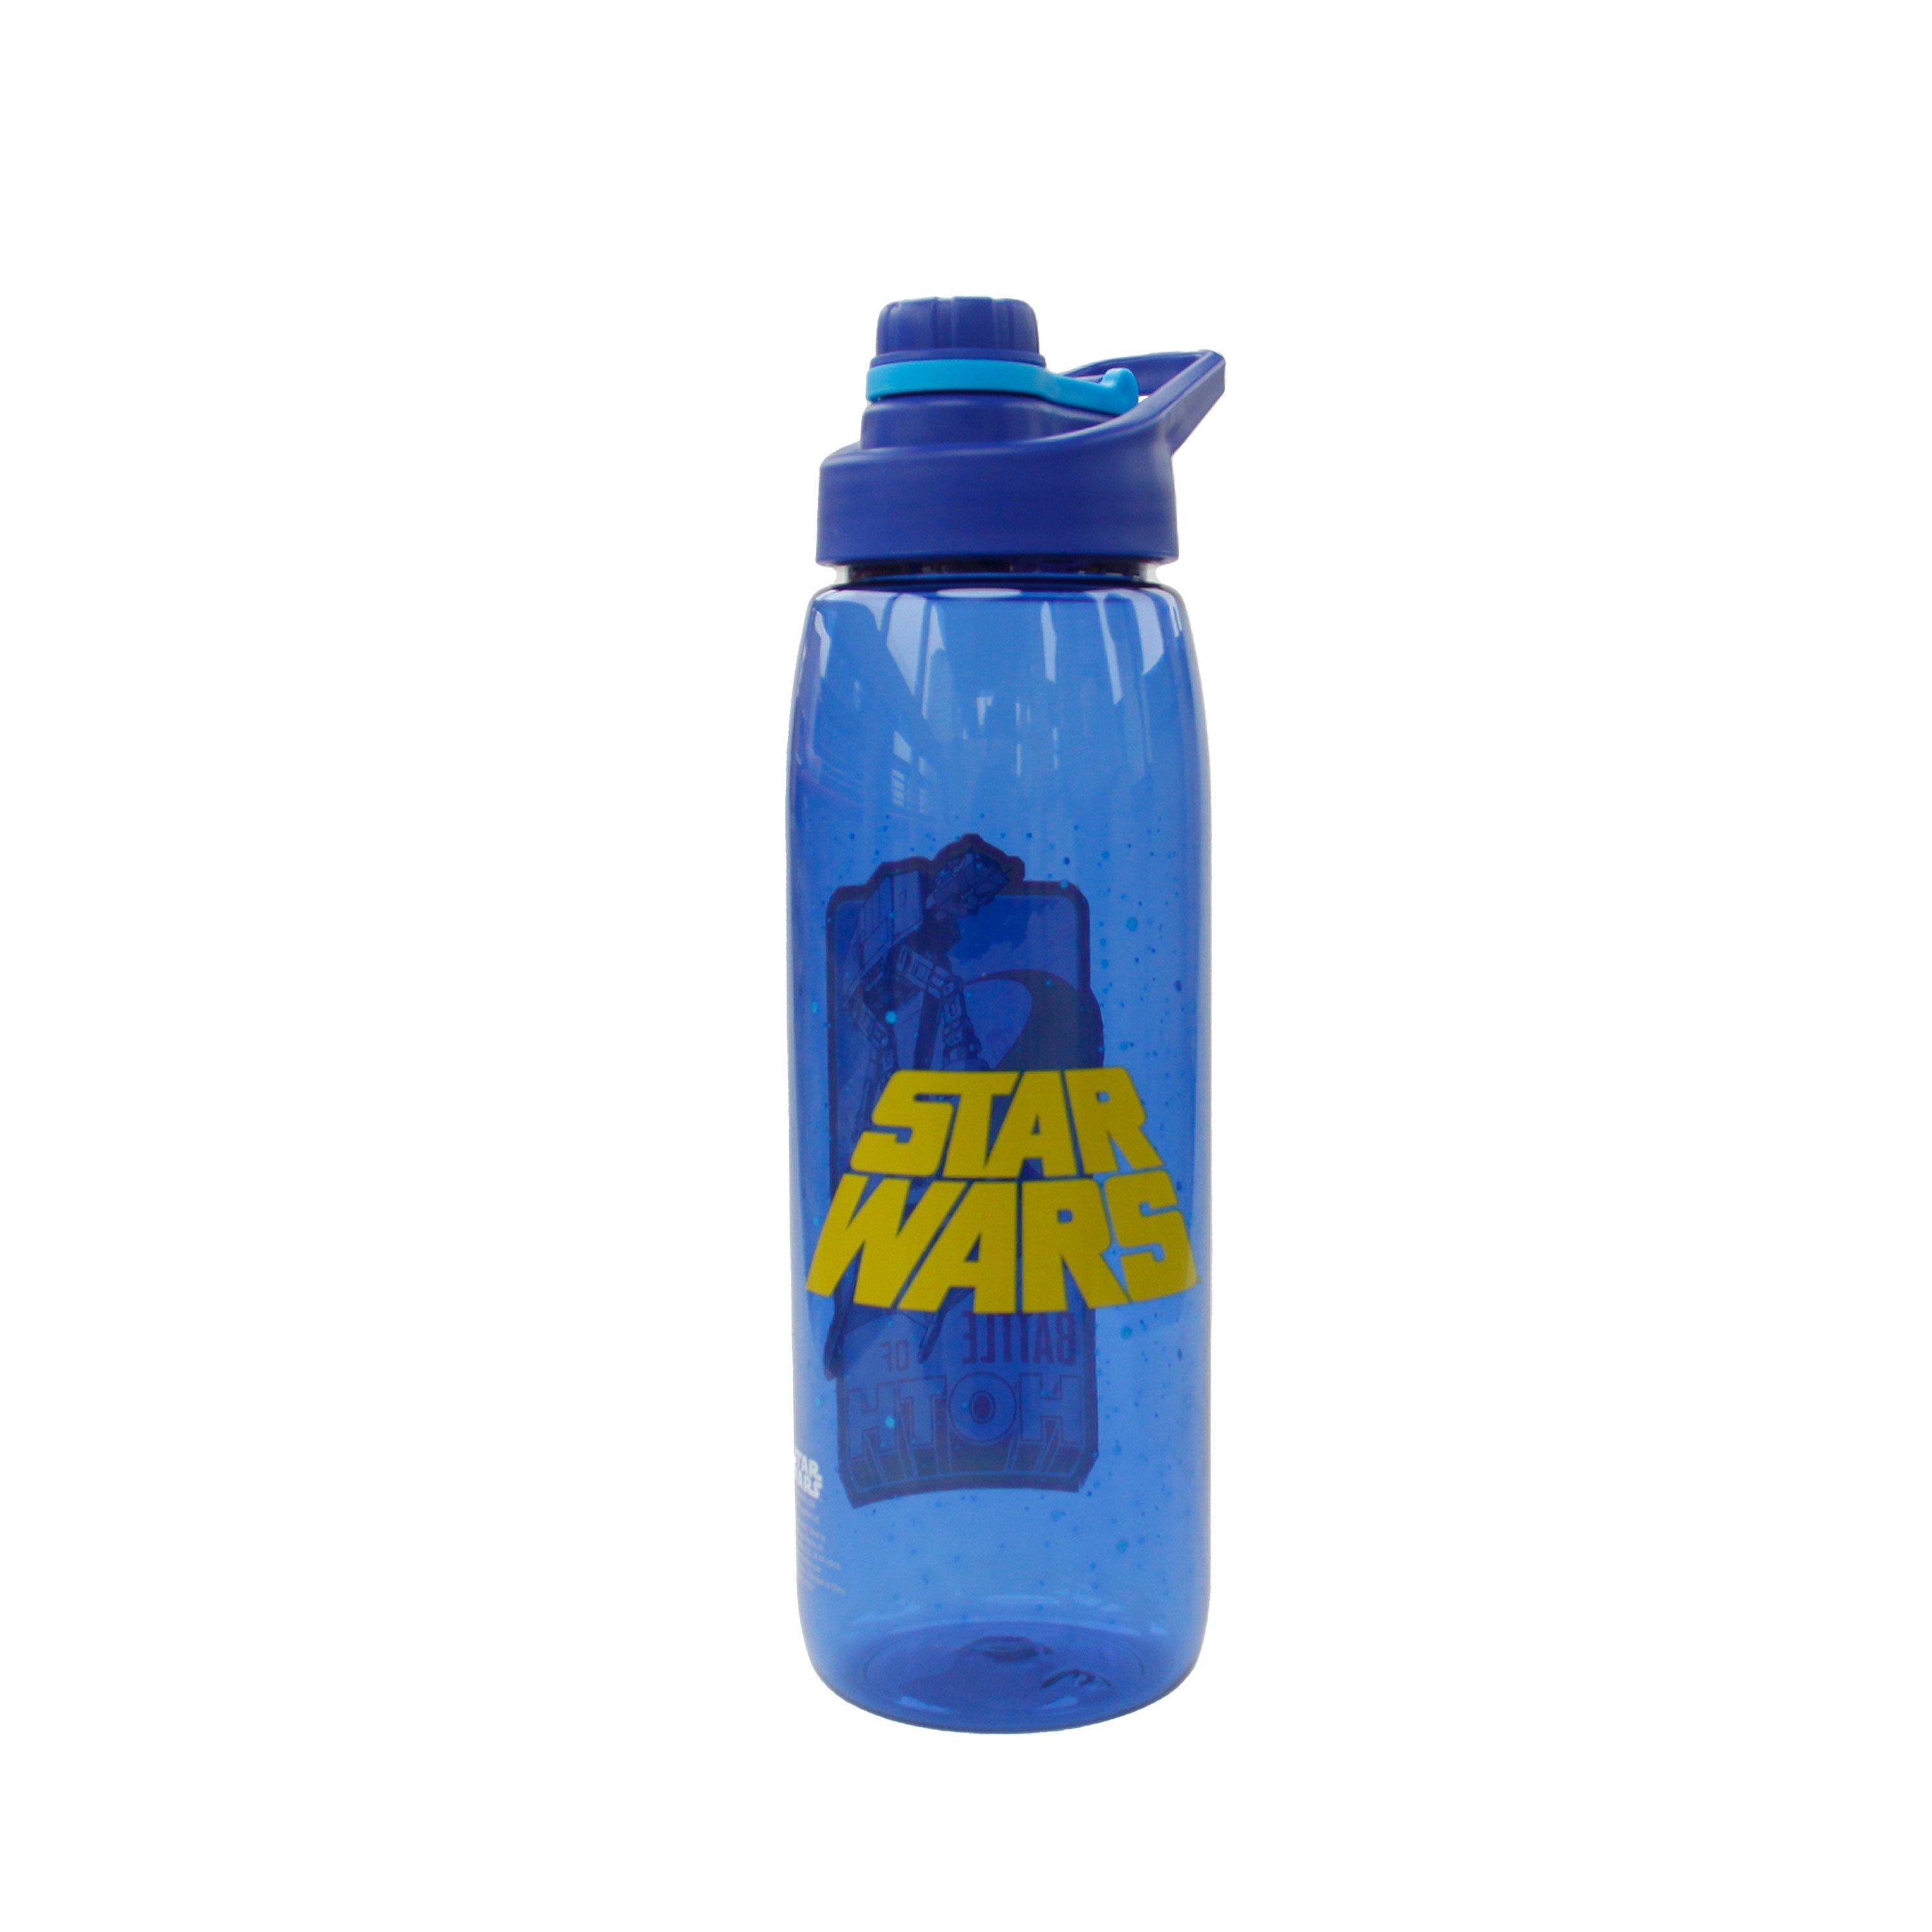 https://media.gamestop.com/i/gamestop/11166332_ALT02/Star-Wars-Vintage-Battle-of-Hoth-28-oz-Water-Bottle-with-Screw-Lid?$pdp$